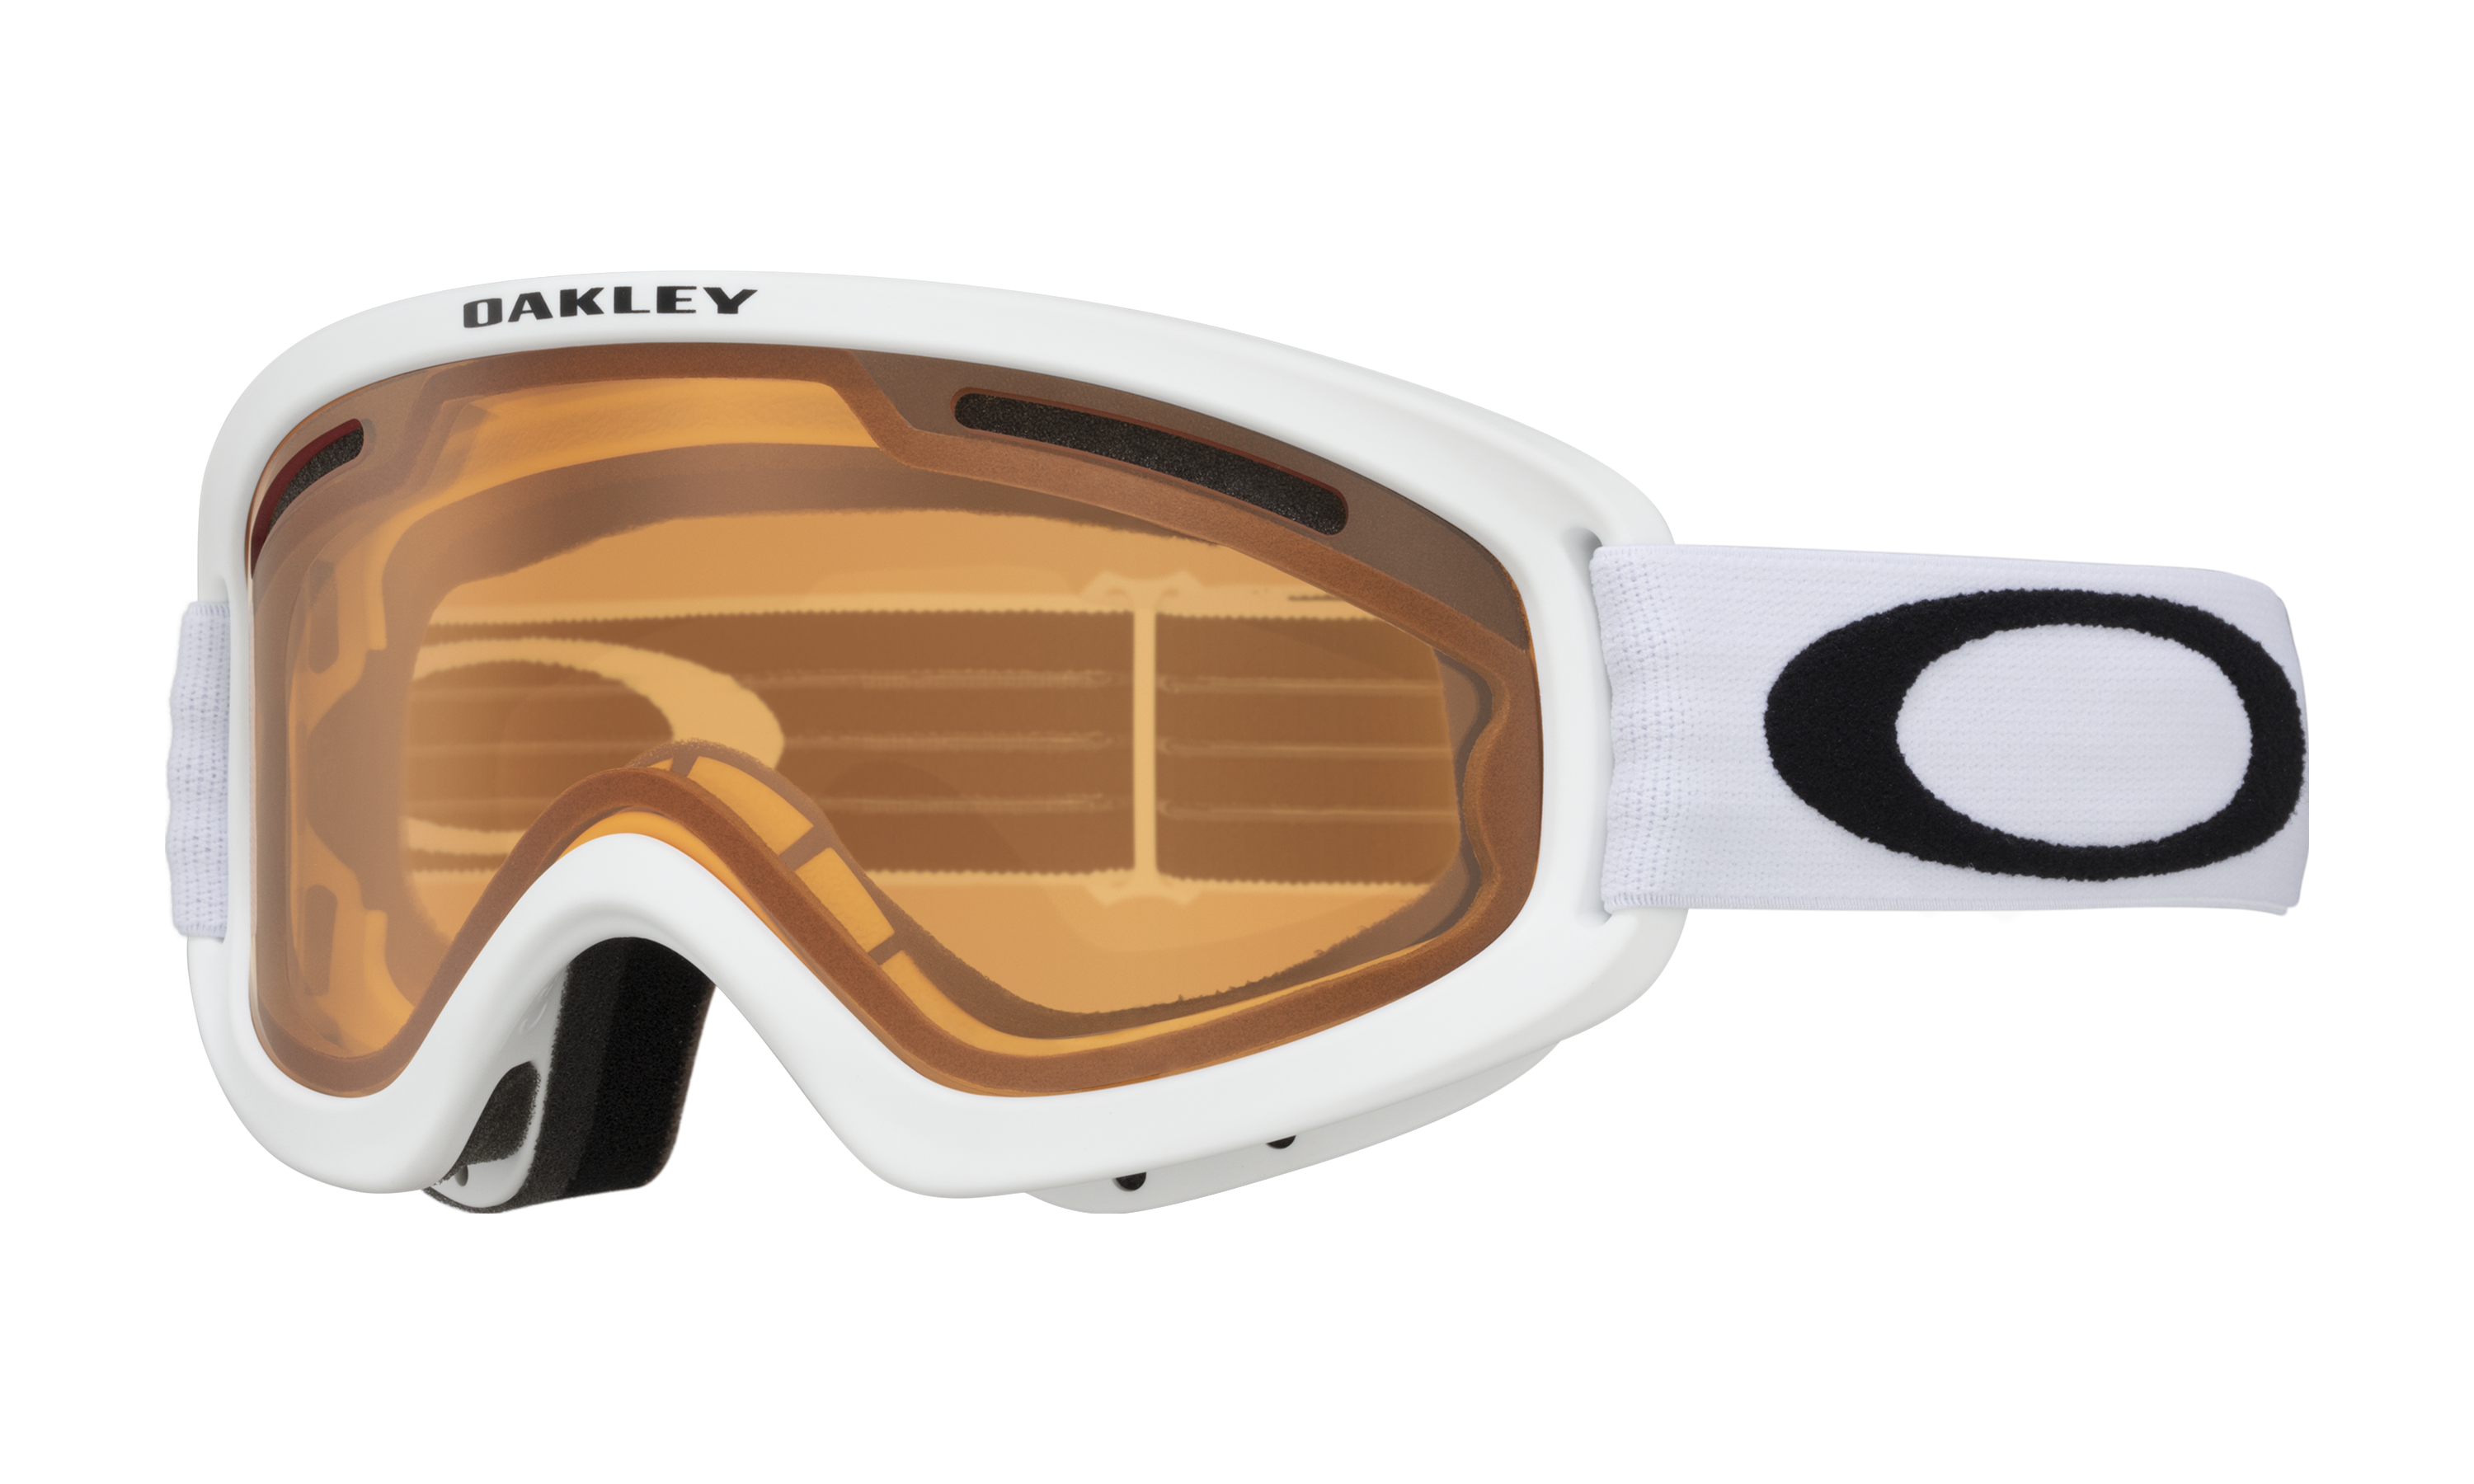 oakley 02 xs matte white goggles